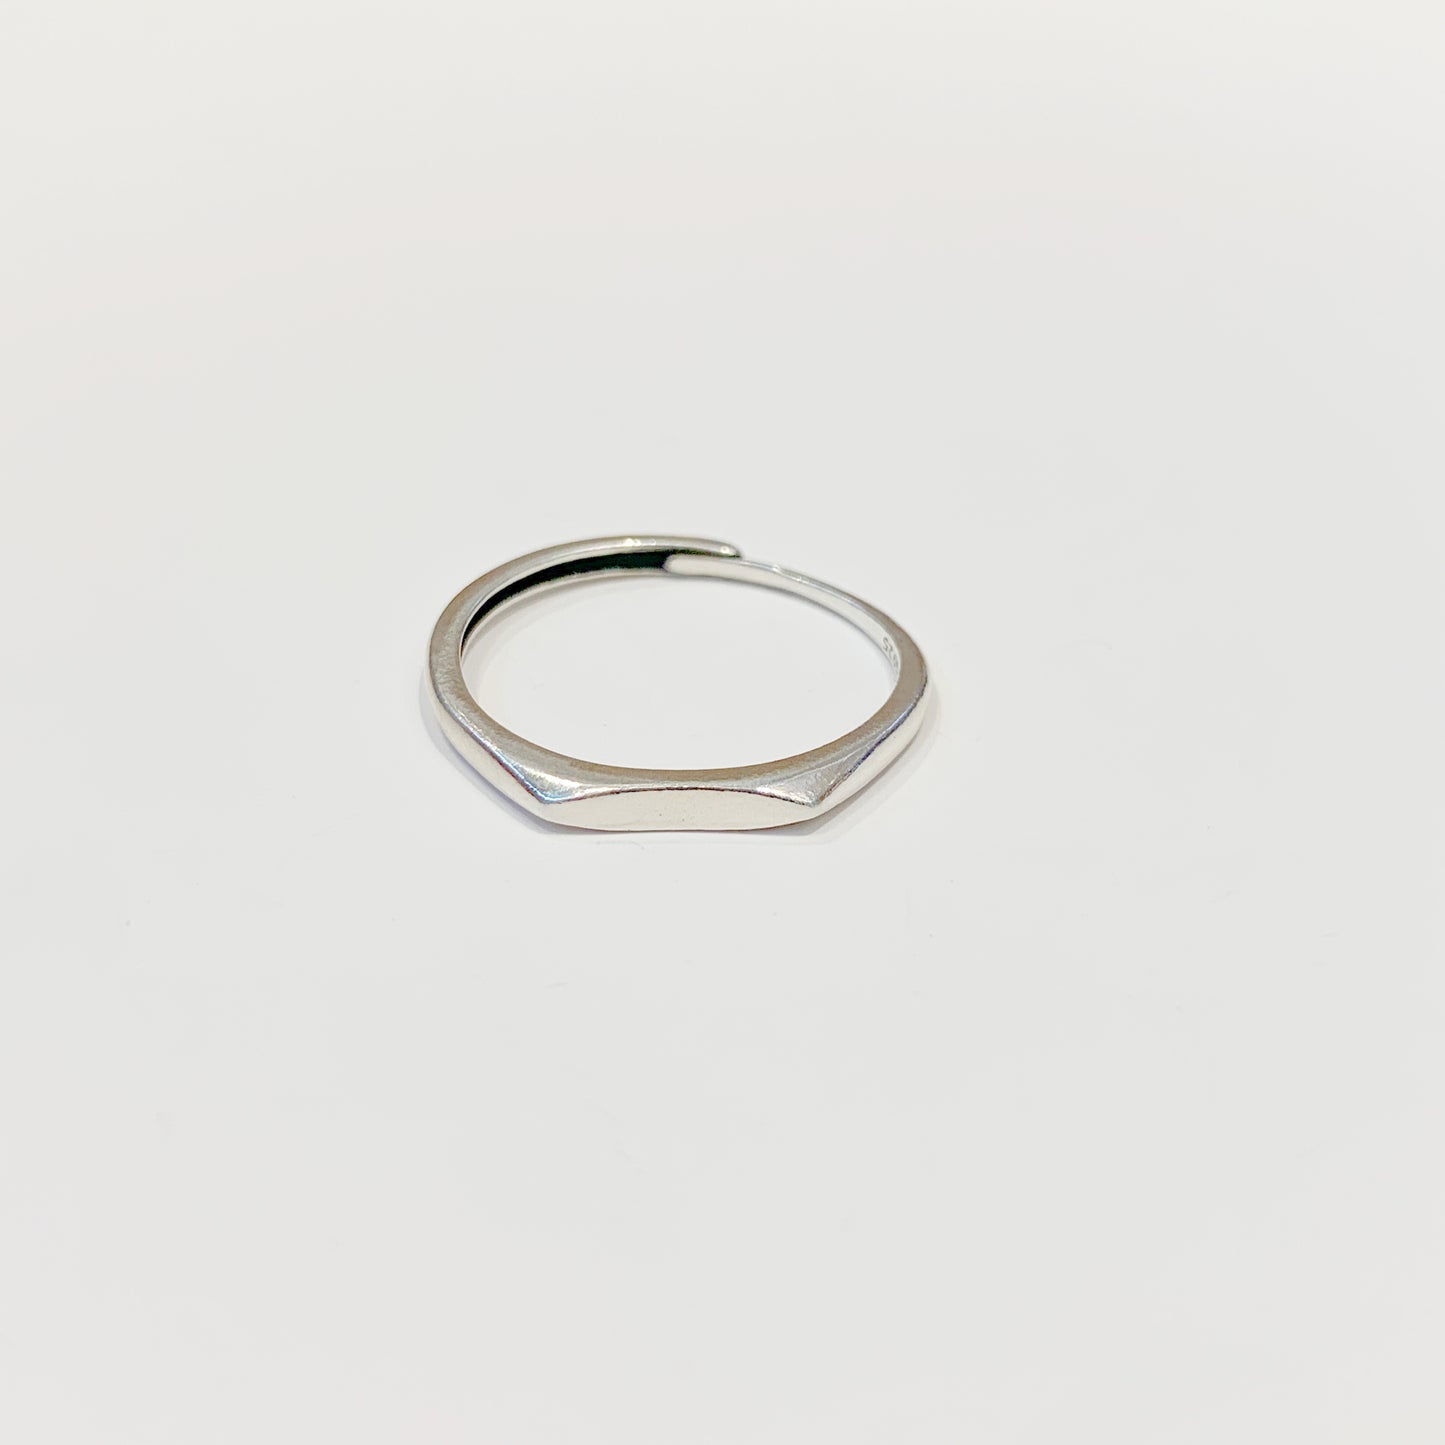 Silver flat adjustable ring